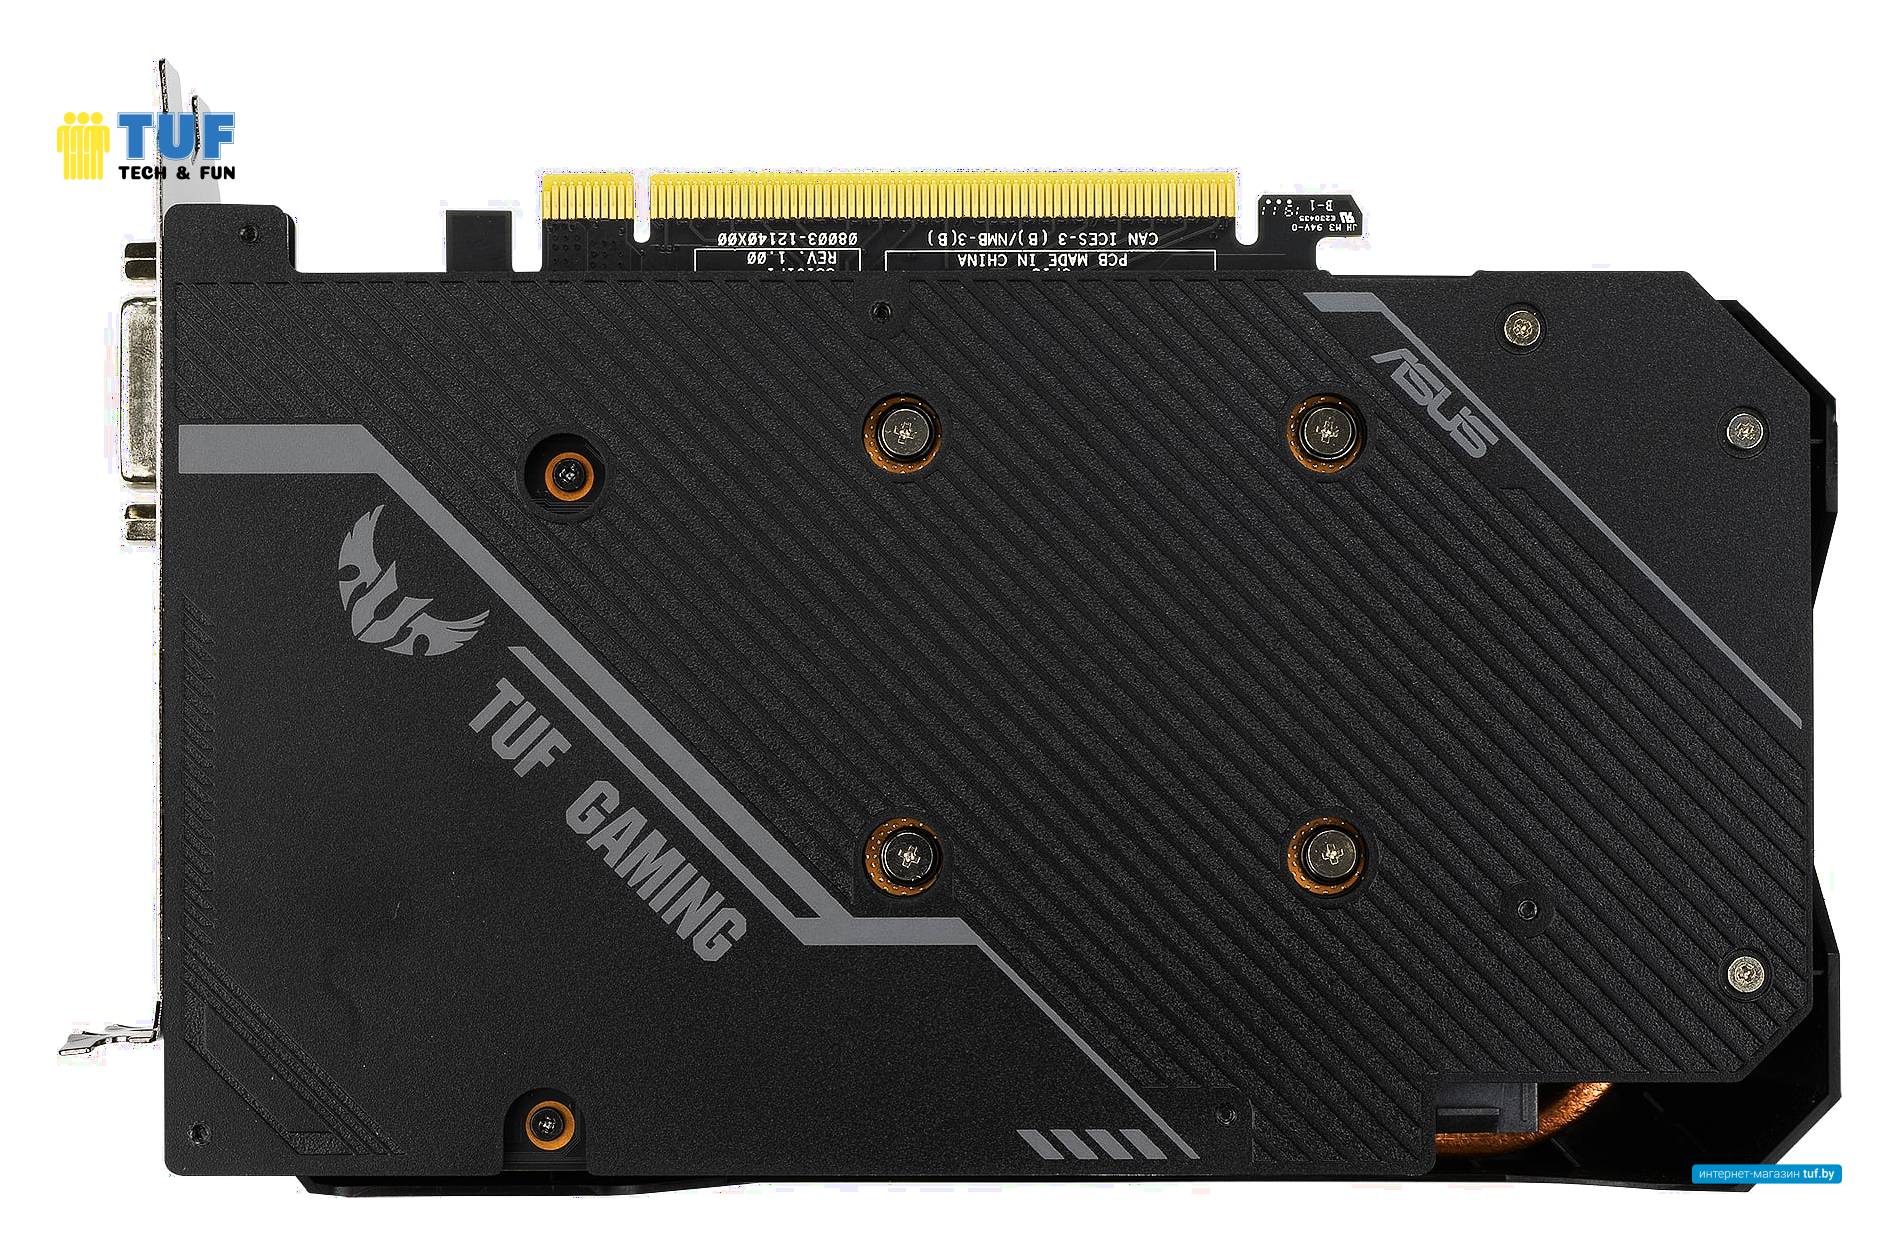 Видеокарта ASUS TUF Gaming GeForce GTX 1660 Super OC 6GB GDDR6